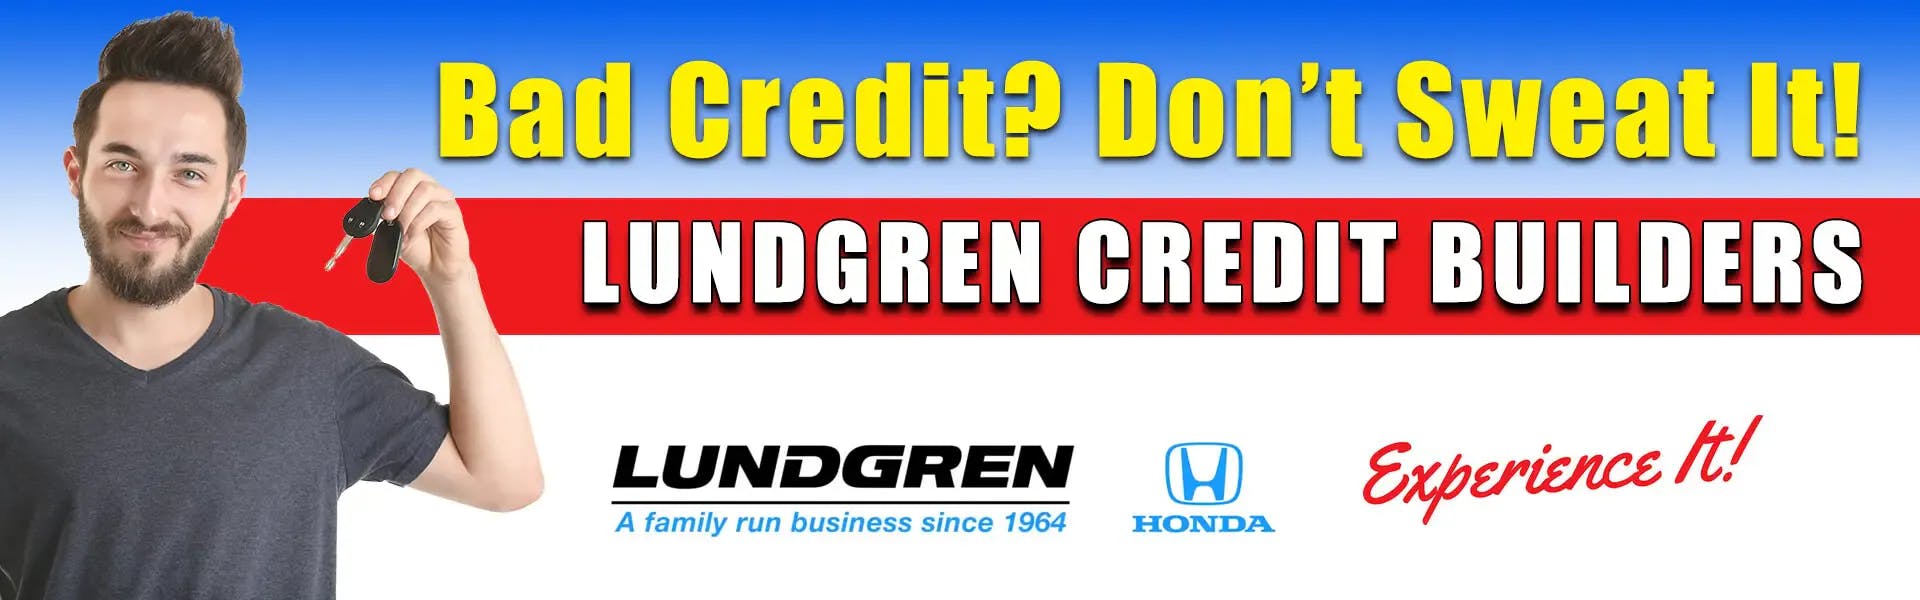 Lundgren Credit Builders in Greenfield, MA